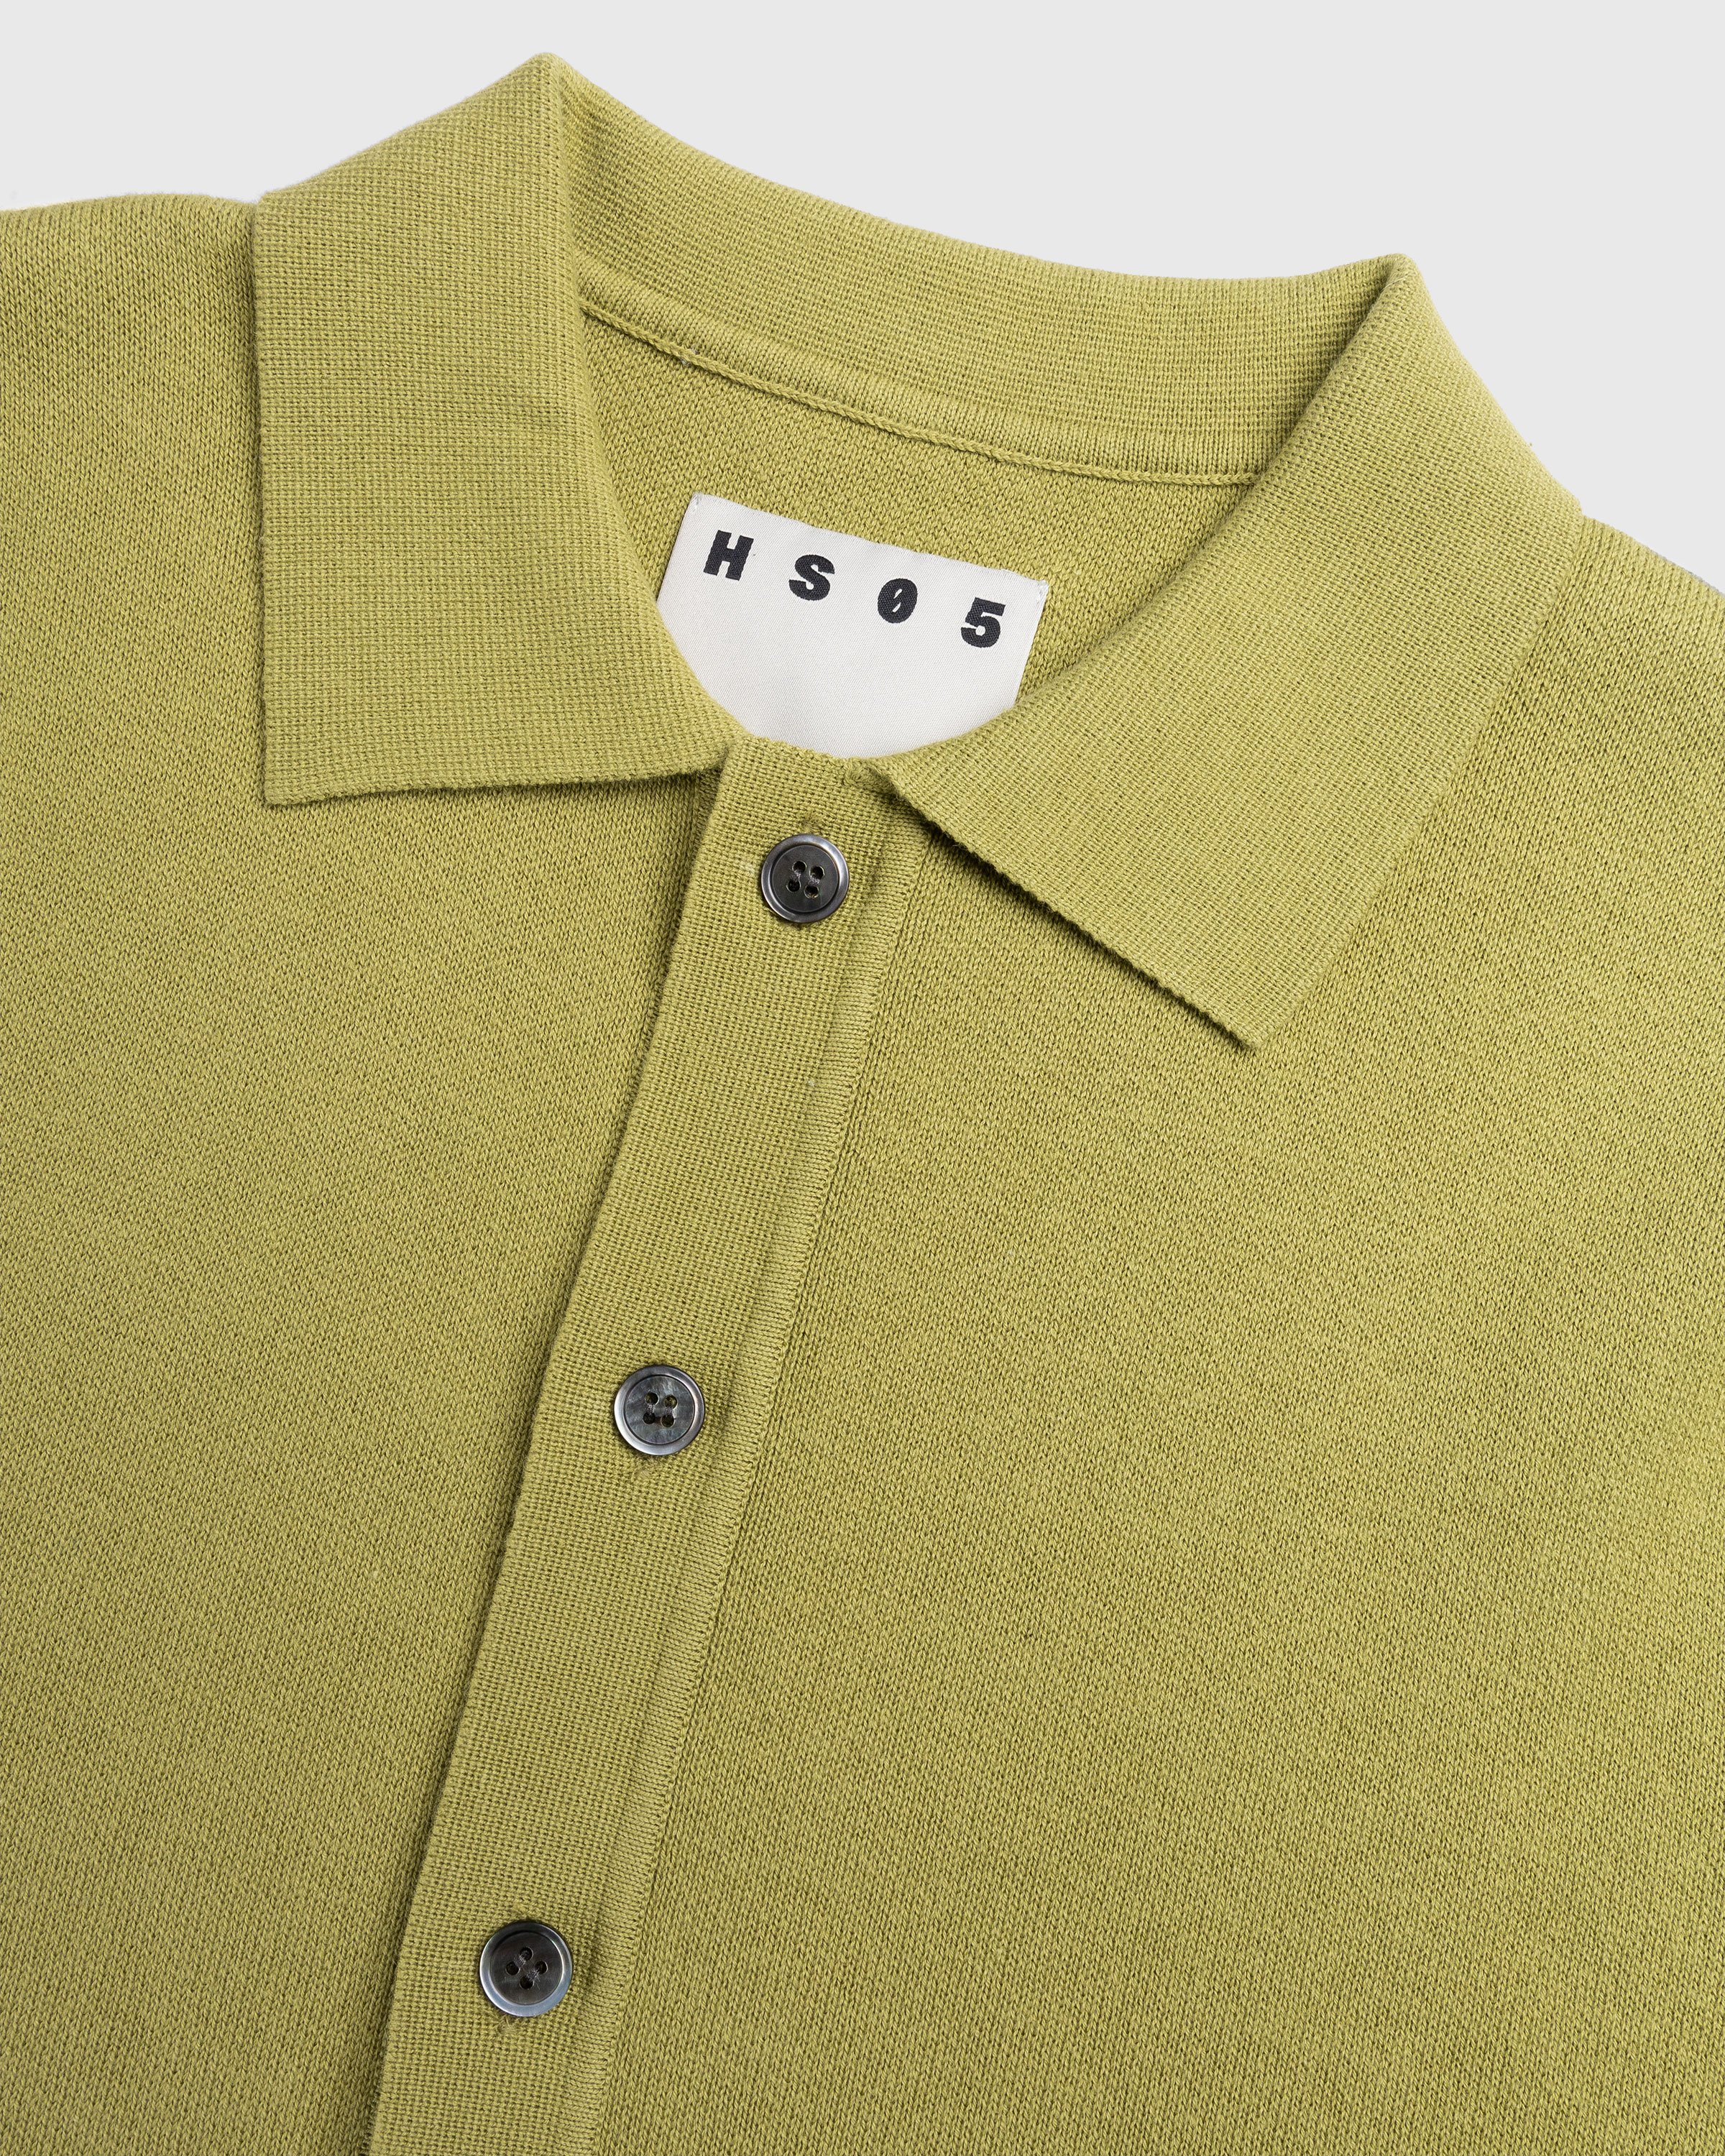 Highsnobiety HS05 - Cotton Knit Shirt Green - Clothing - Green - Image 6